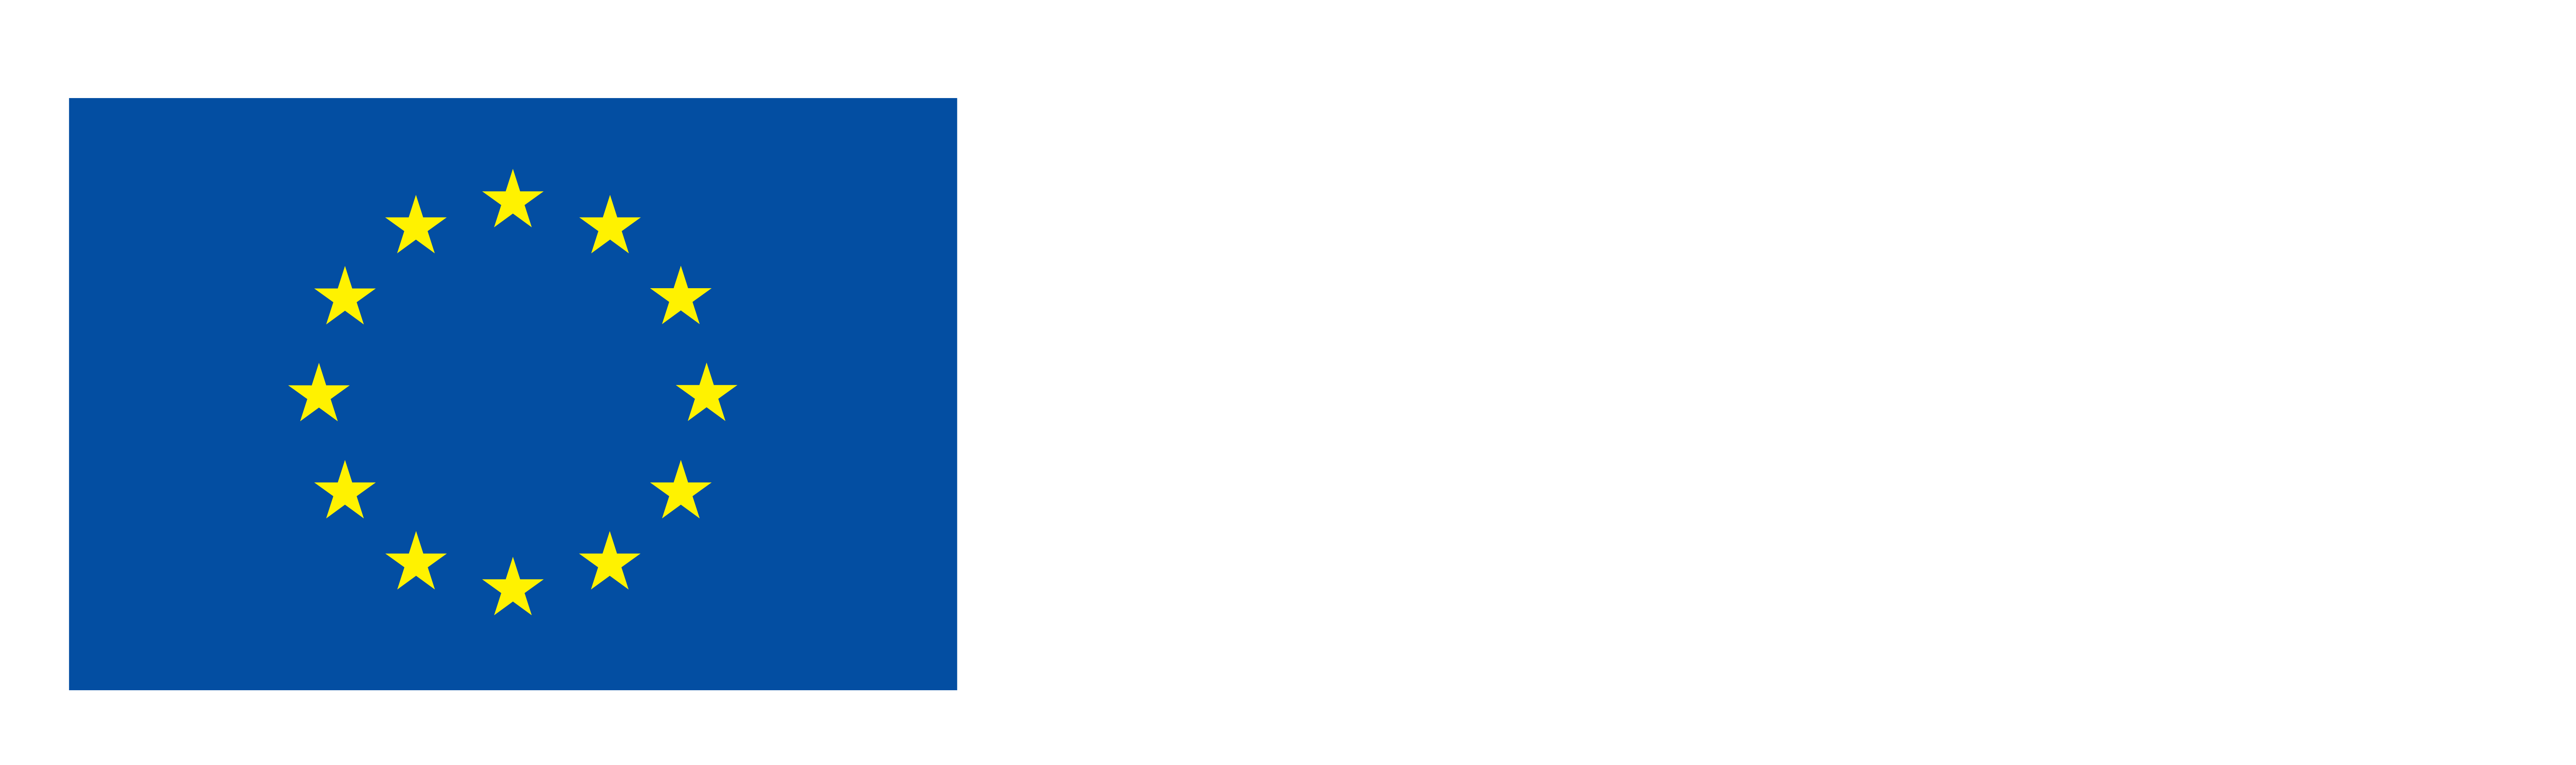 logo financováno EU